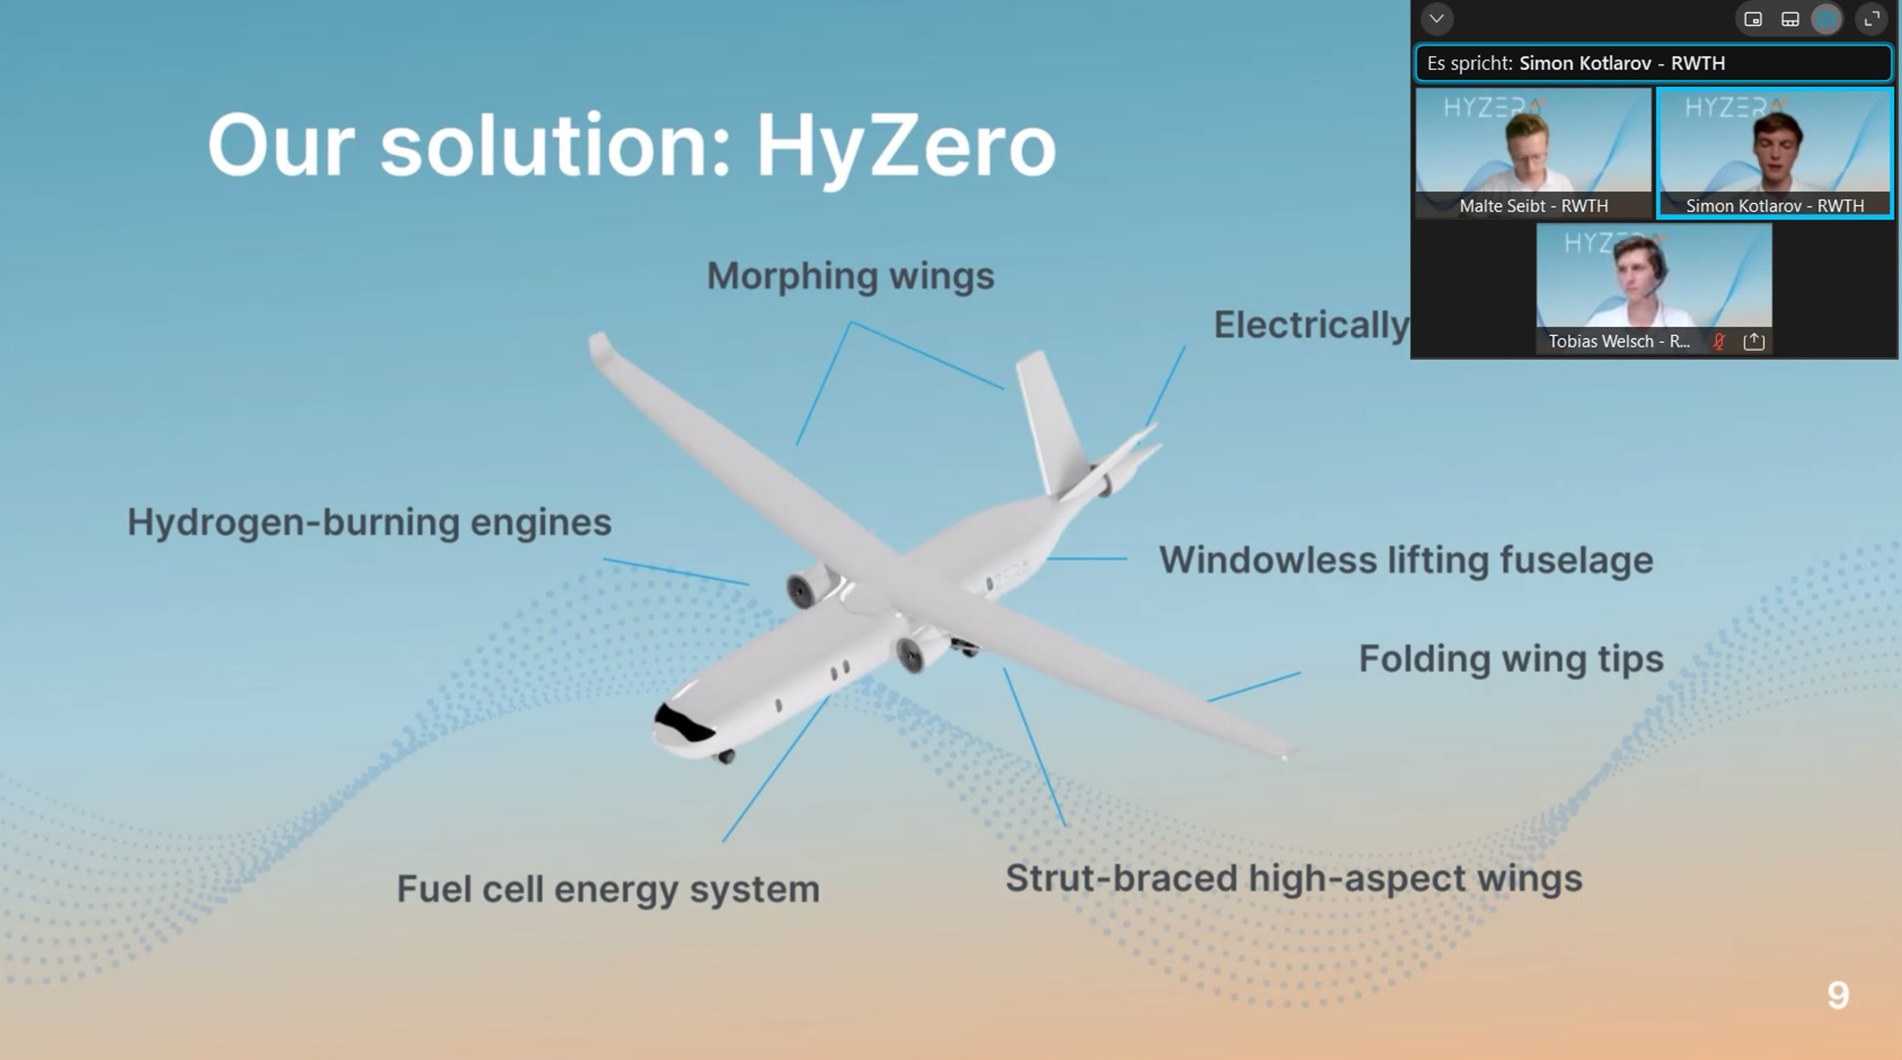 Online presentation of the HyZero concept